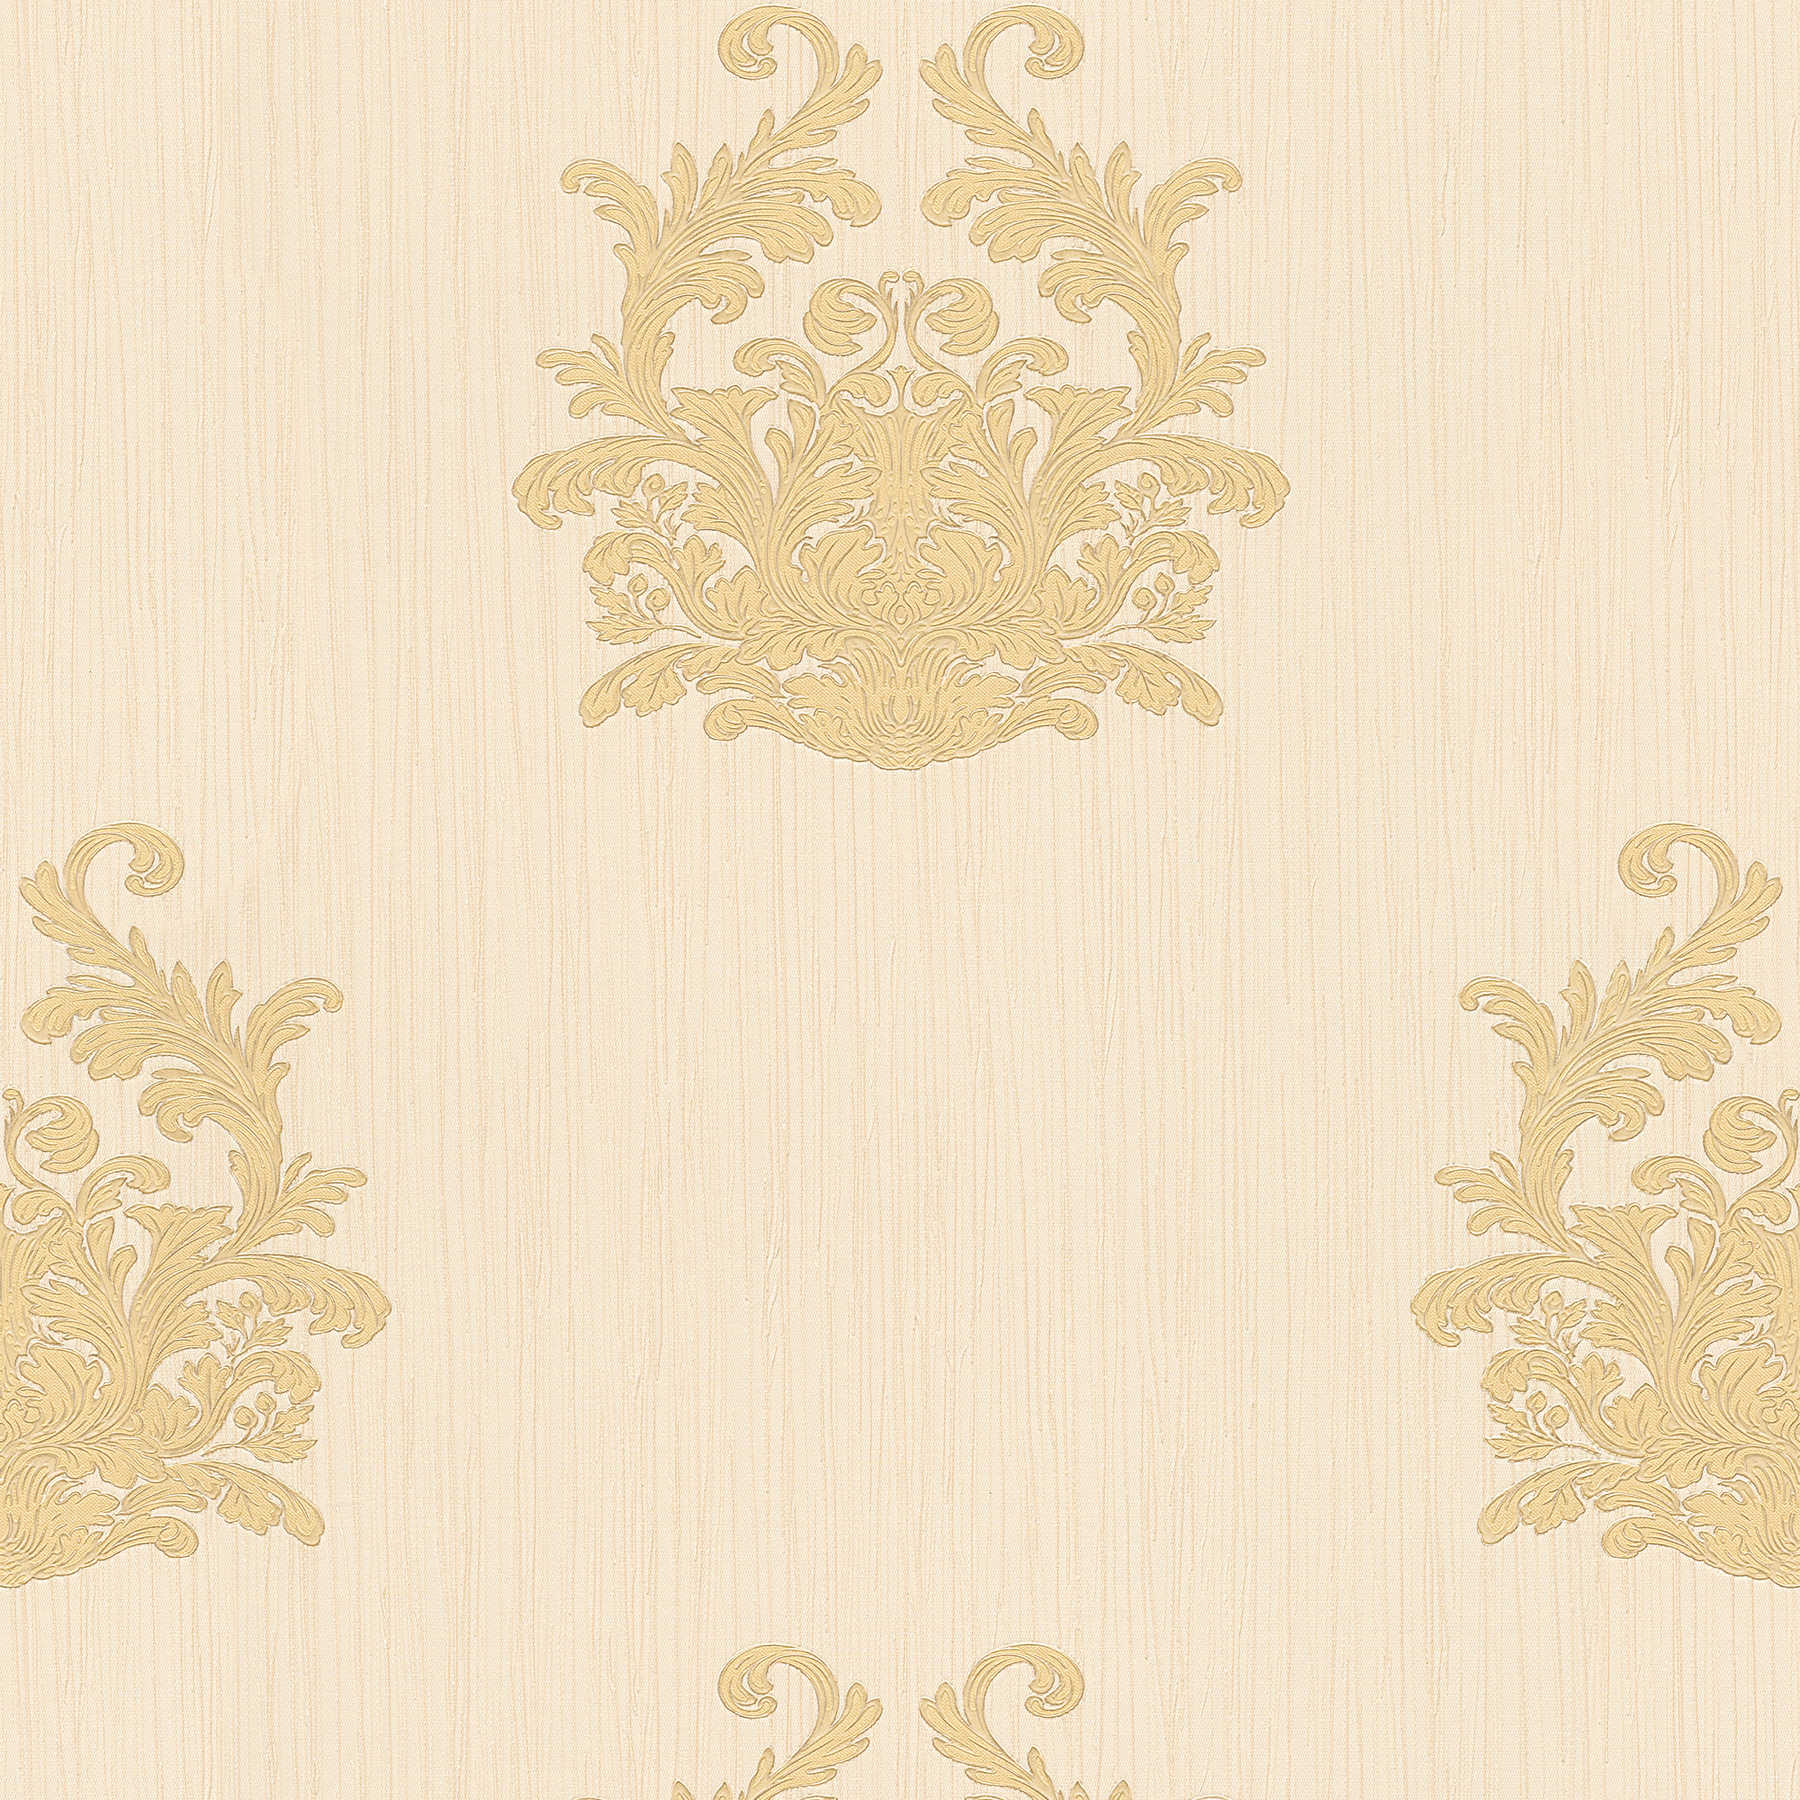         Non-woven wallpaper gold decor with textured pattern & ornaments - cream, metallic
    